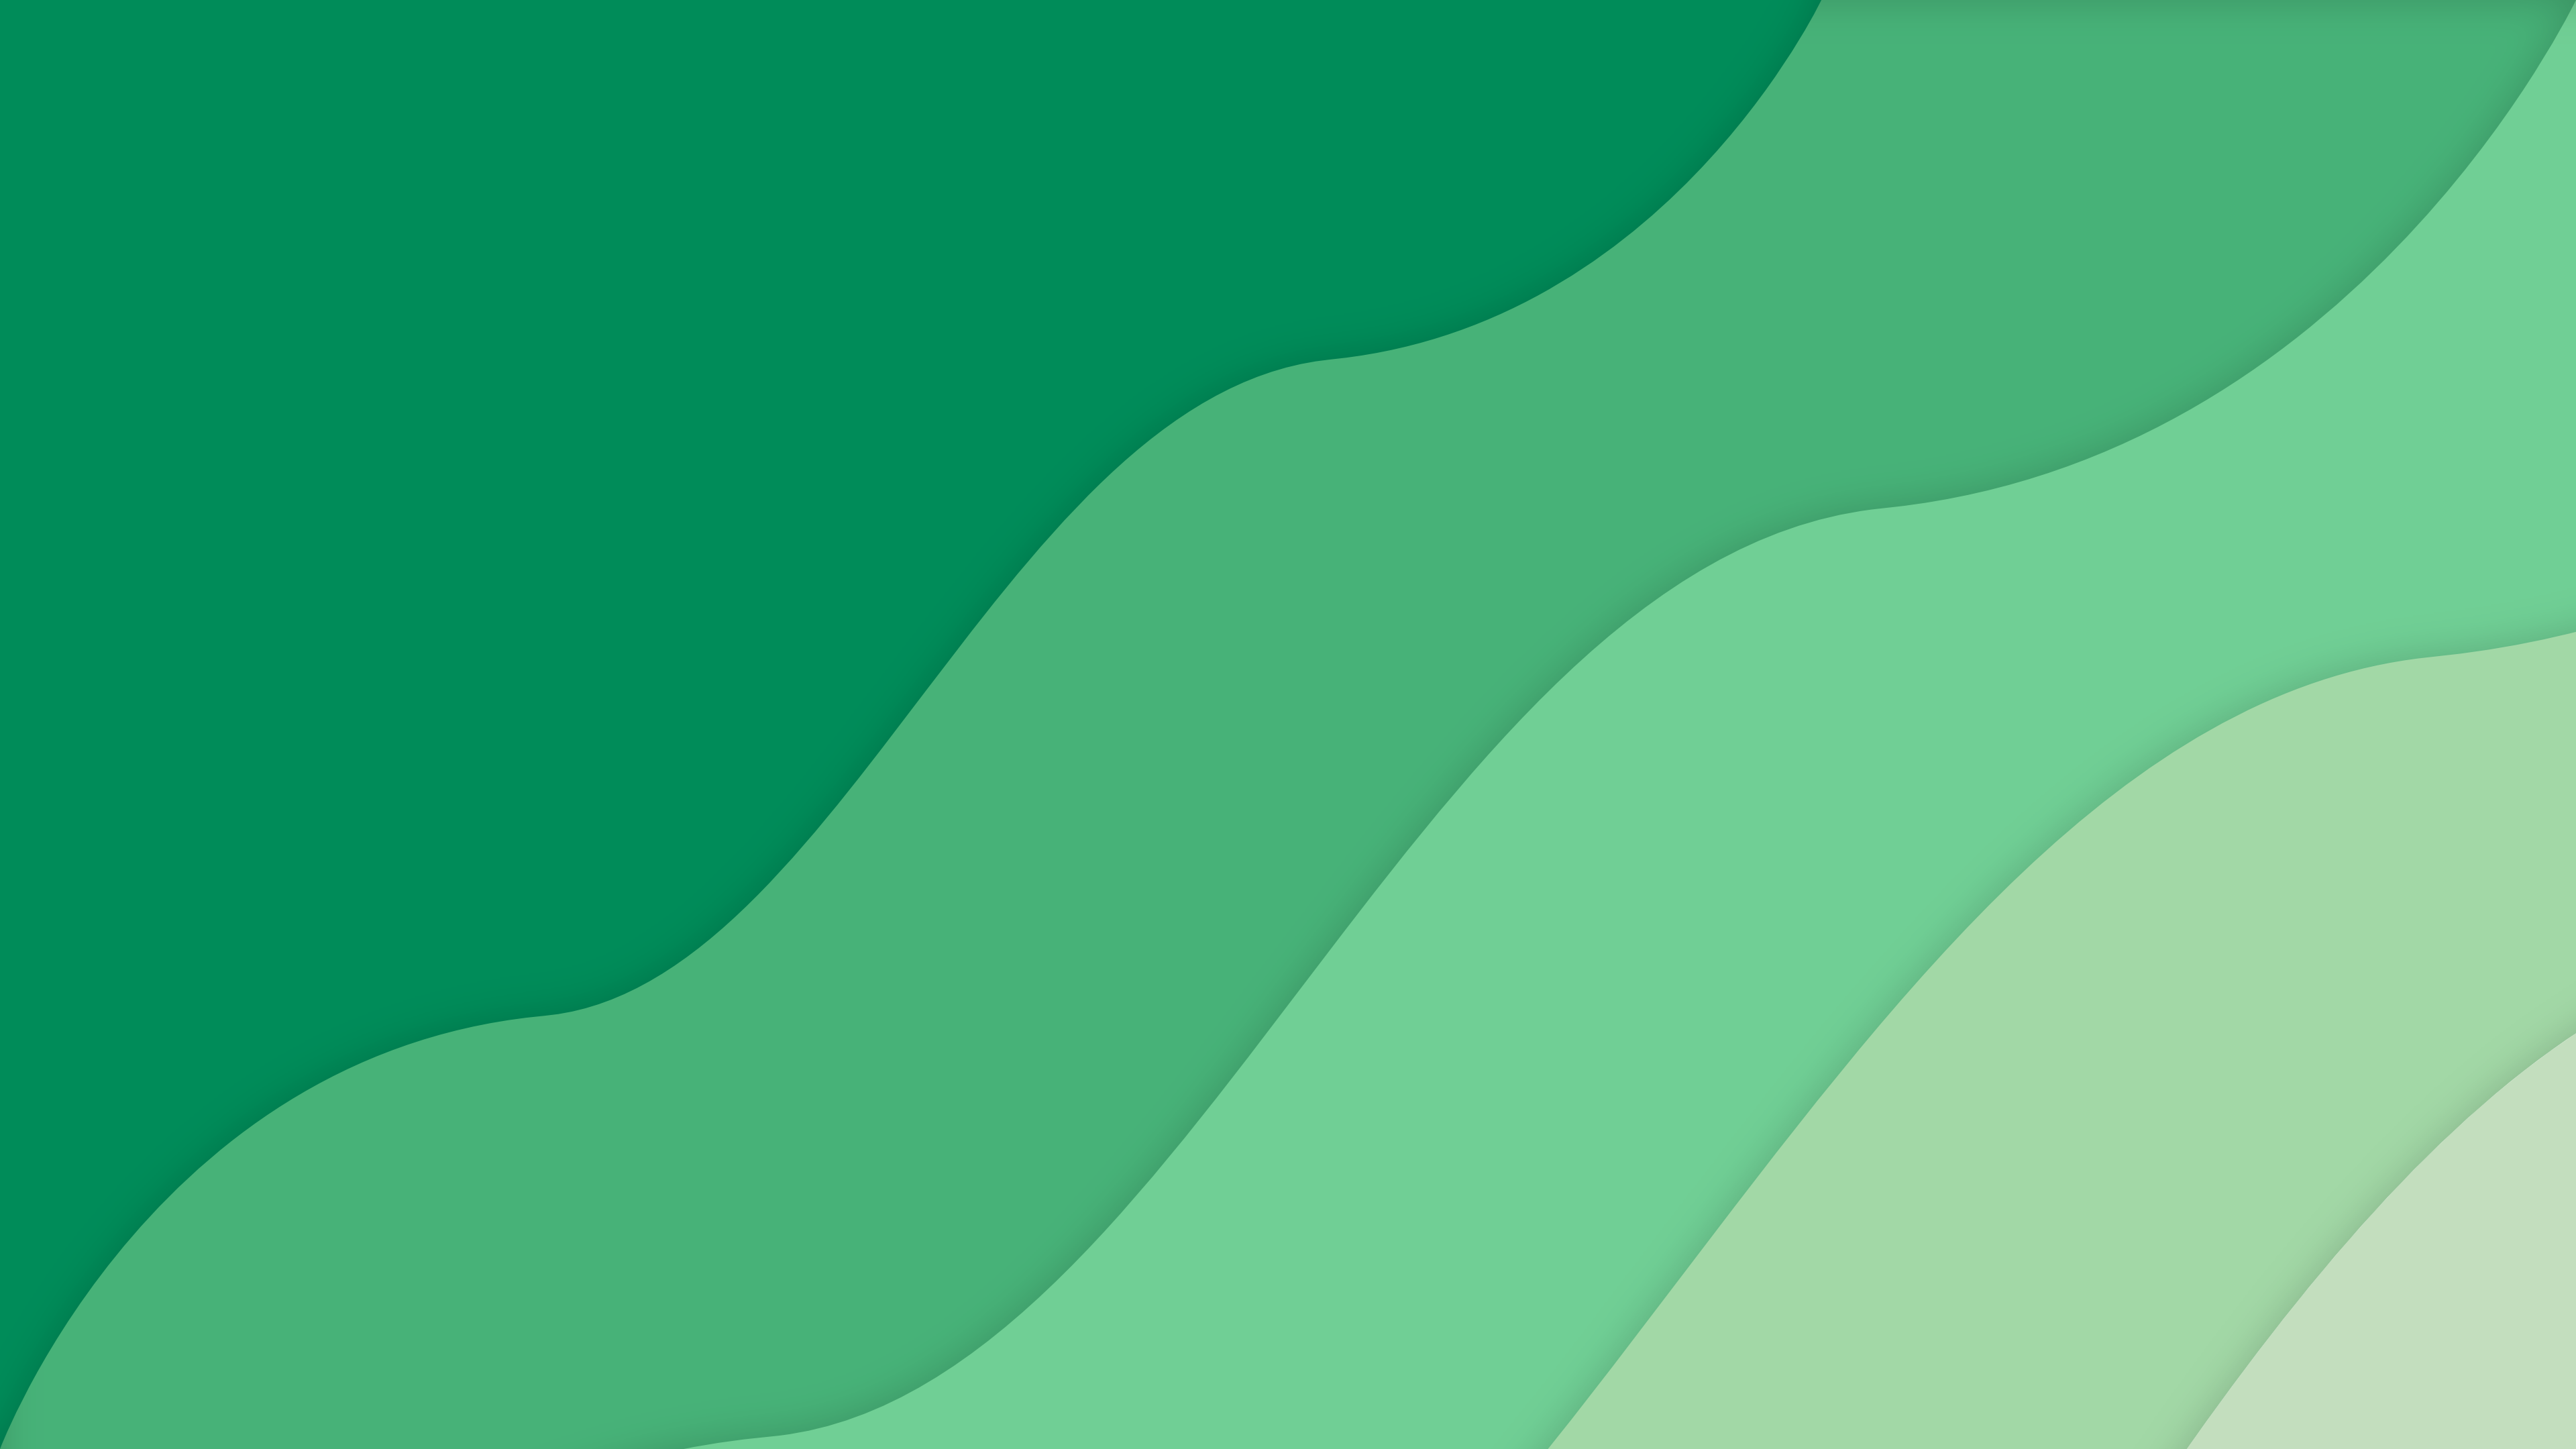 Wallpaper Graphics, Green, Aqua, Teal, Background - Download Free Image